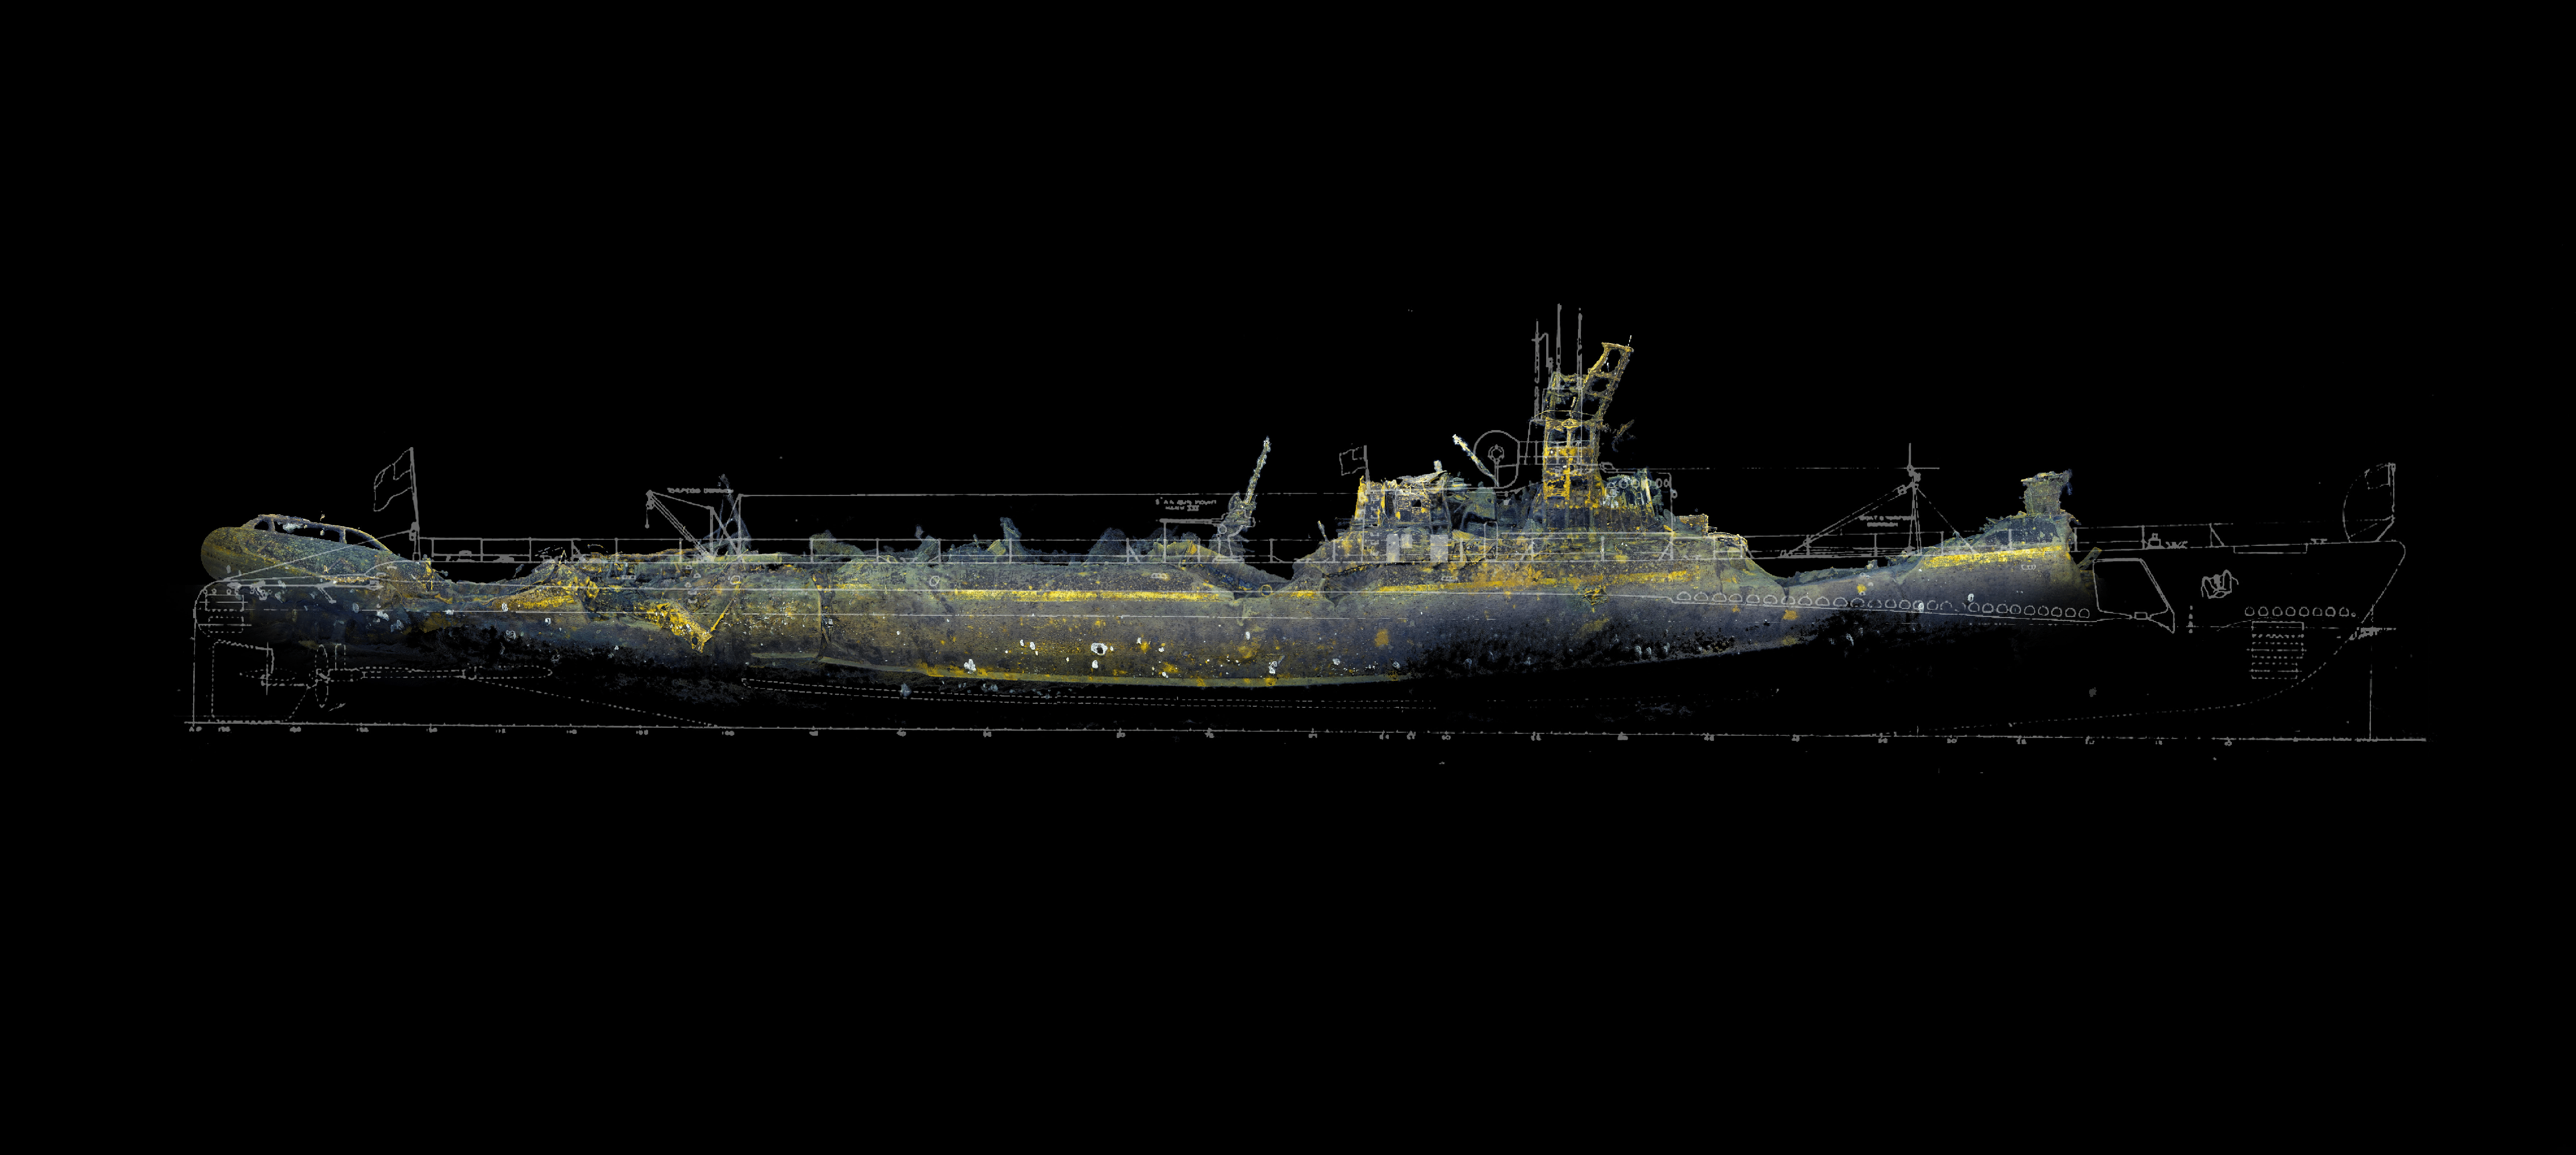 2 USS Grunnion Stern section